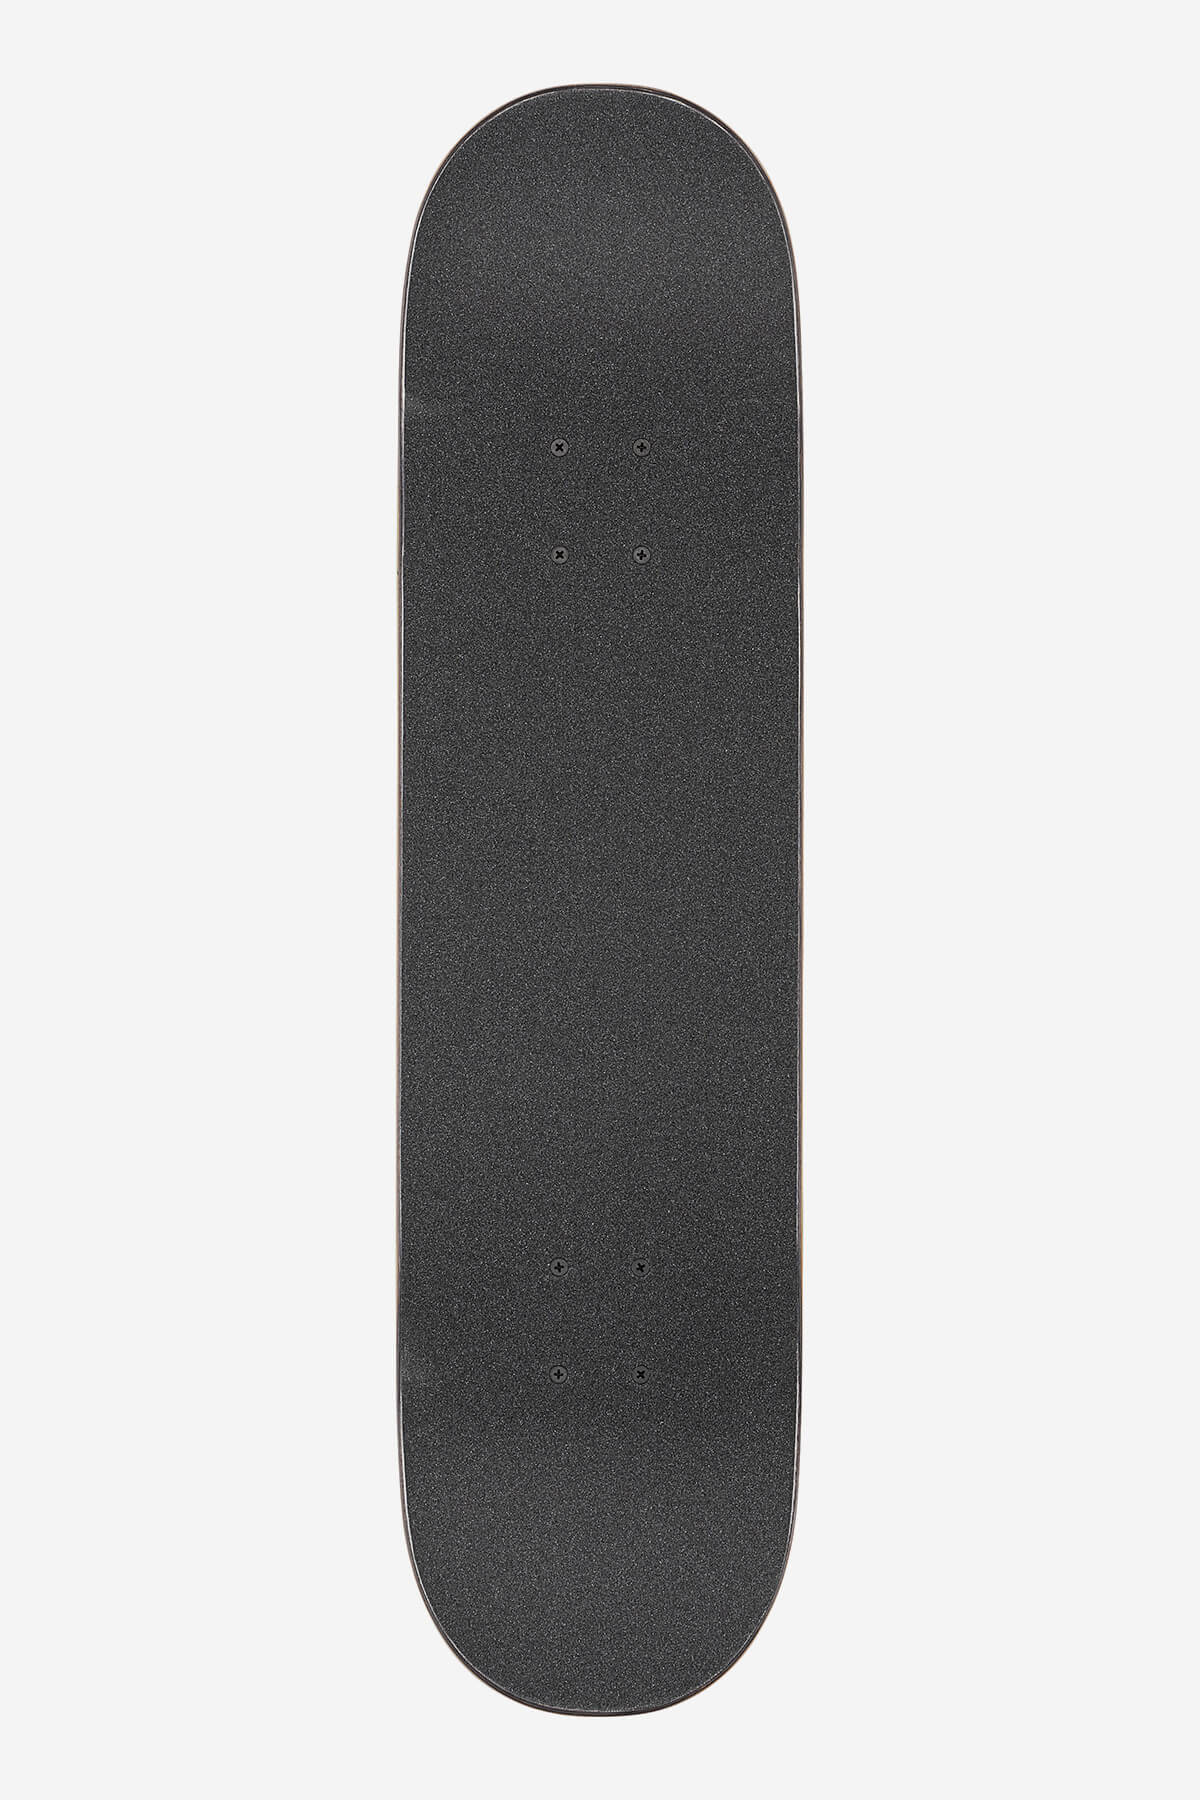 Globe - G1 Natives - Black/Copper - 8.0" complet Skateboard